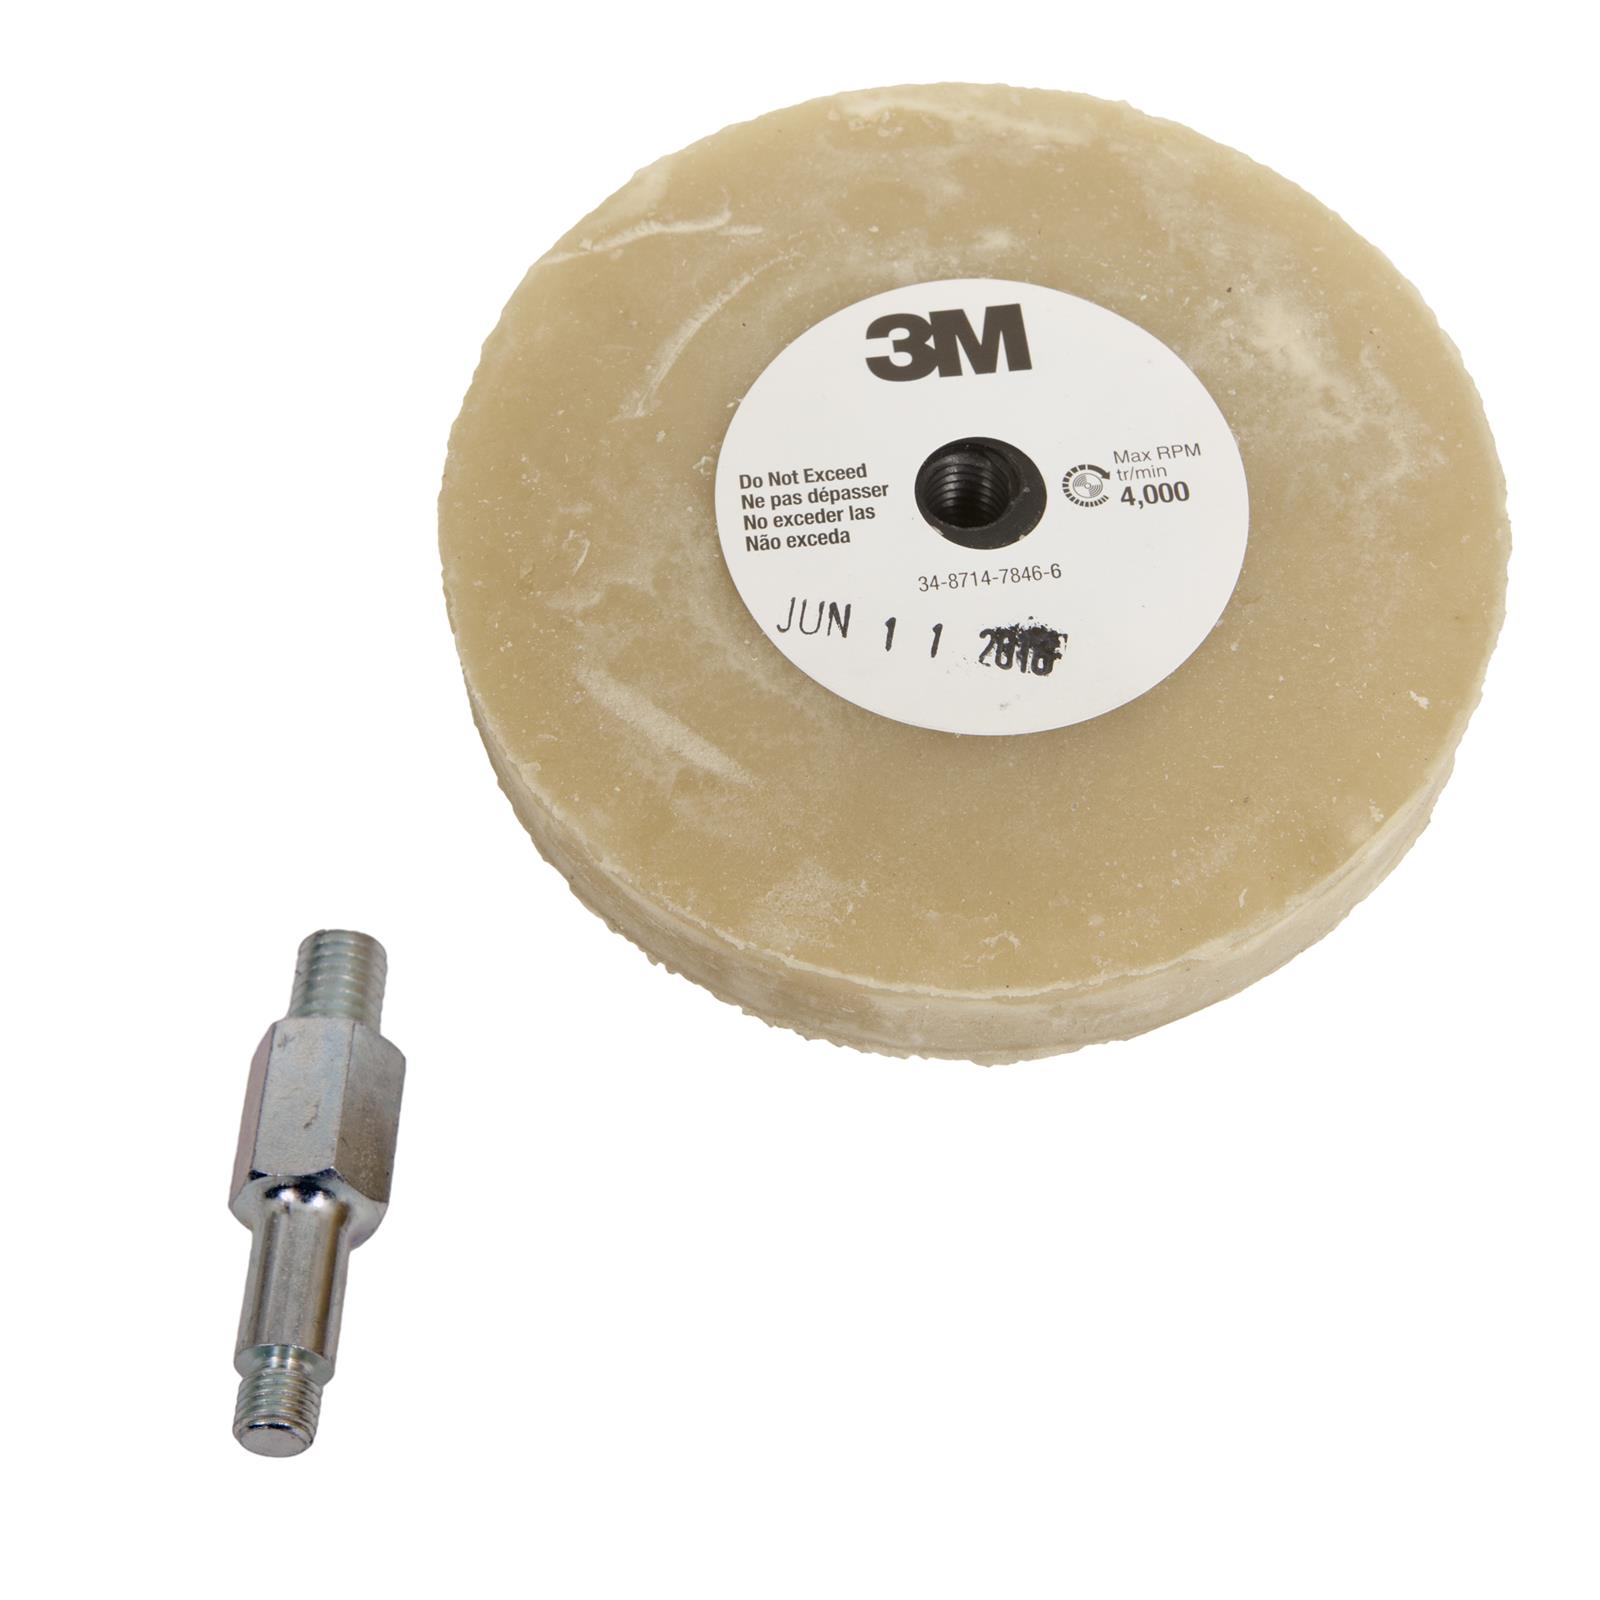 2pcs Eraser Wheel Sticker Remover Tool Detailing Supply Glue